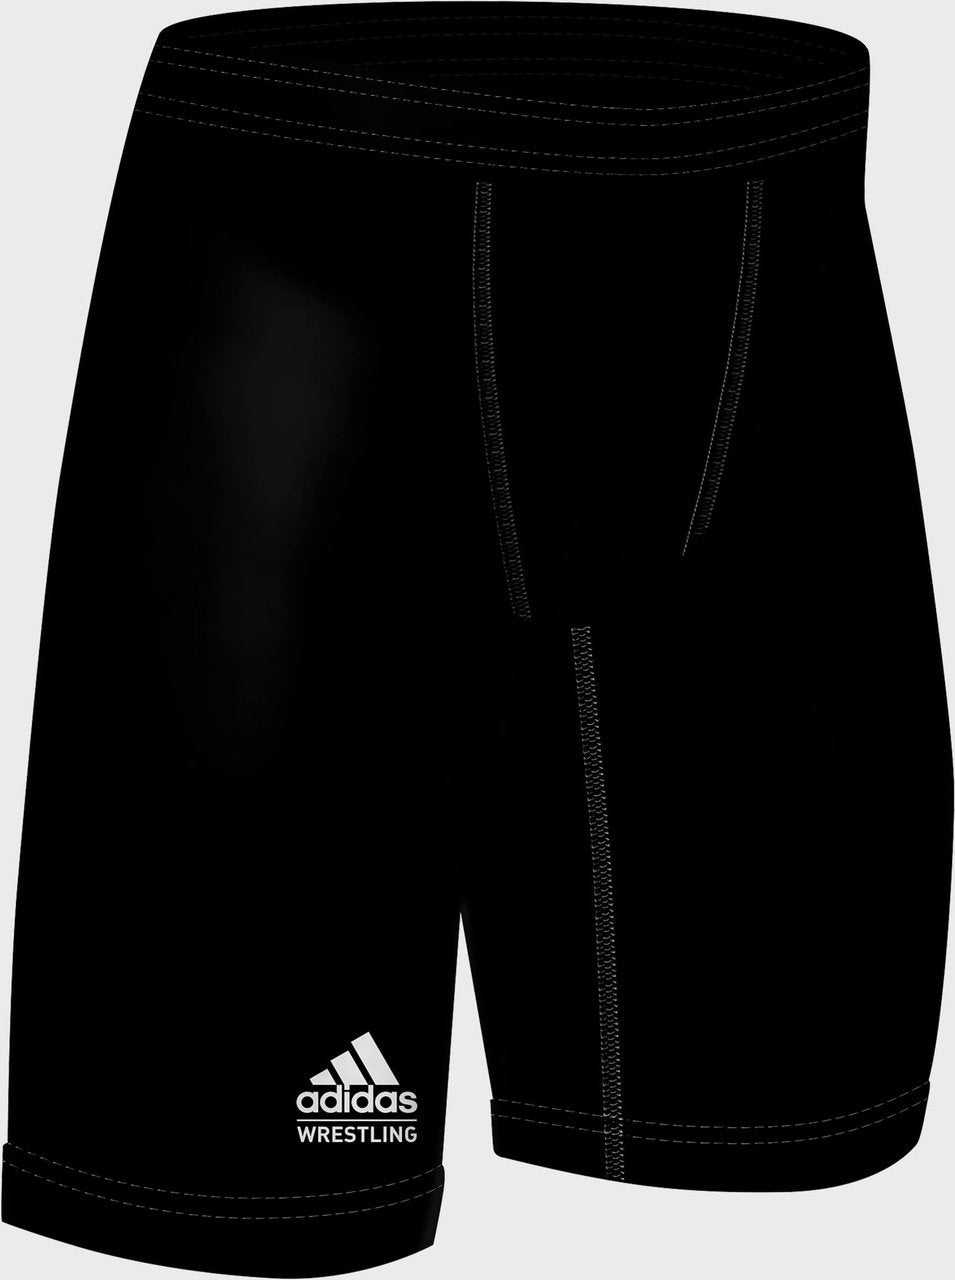 Adidas aA301s Compression Wrestling Shorts - Black